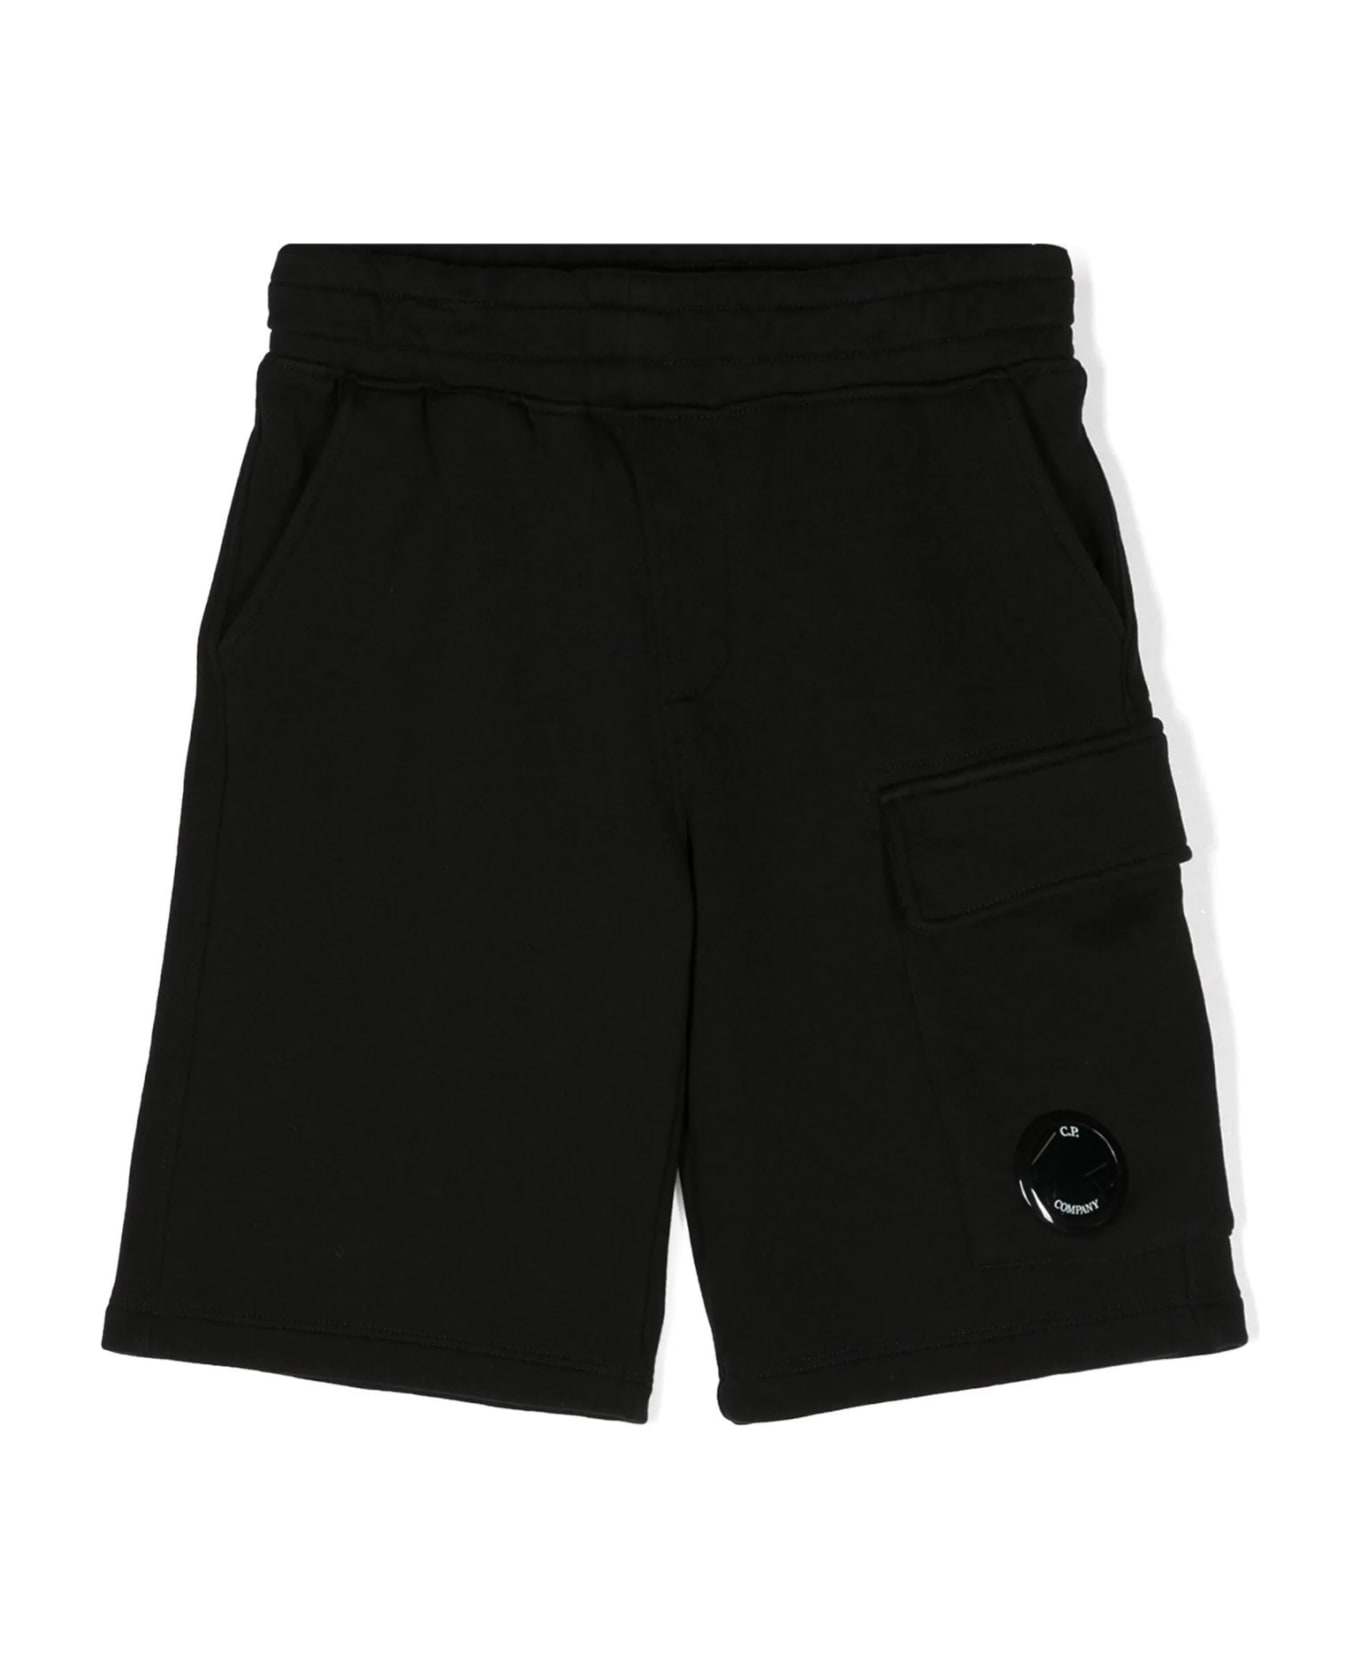 C.P. Company Shorts Black - Black ボトムス